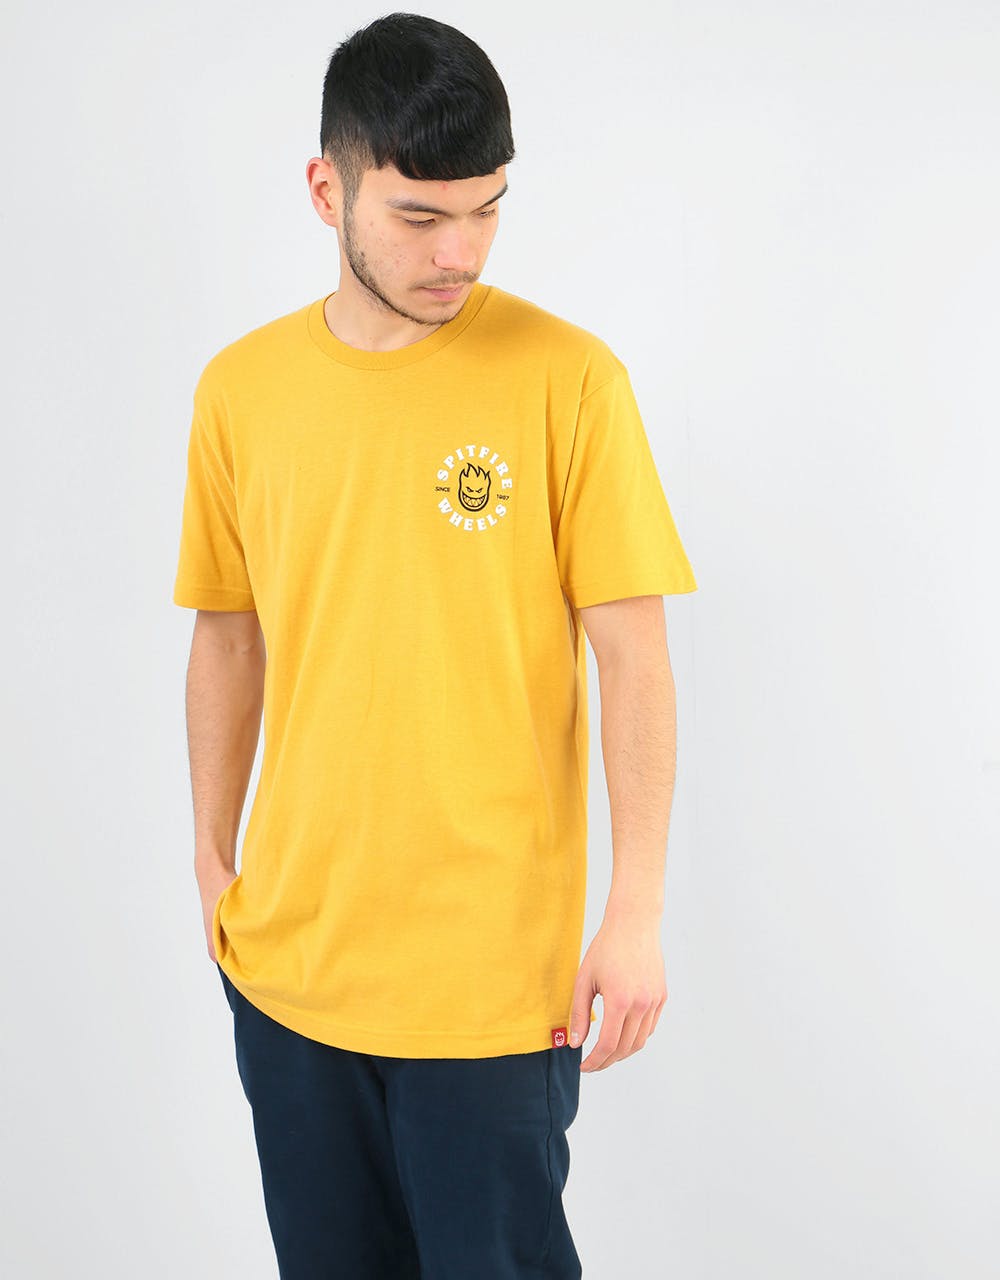 Spitfire Bighead Classic T-Shirt - Mustard/White/Black